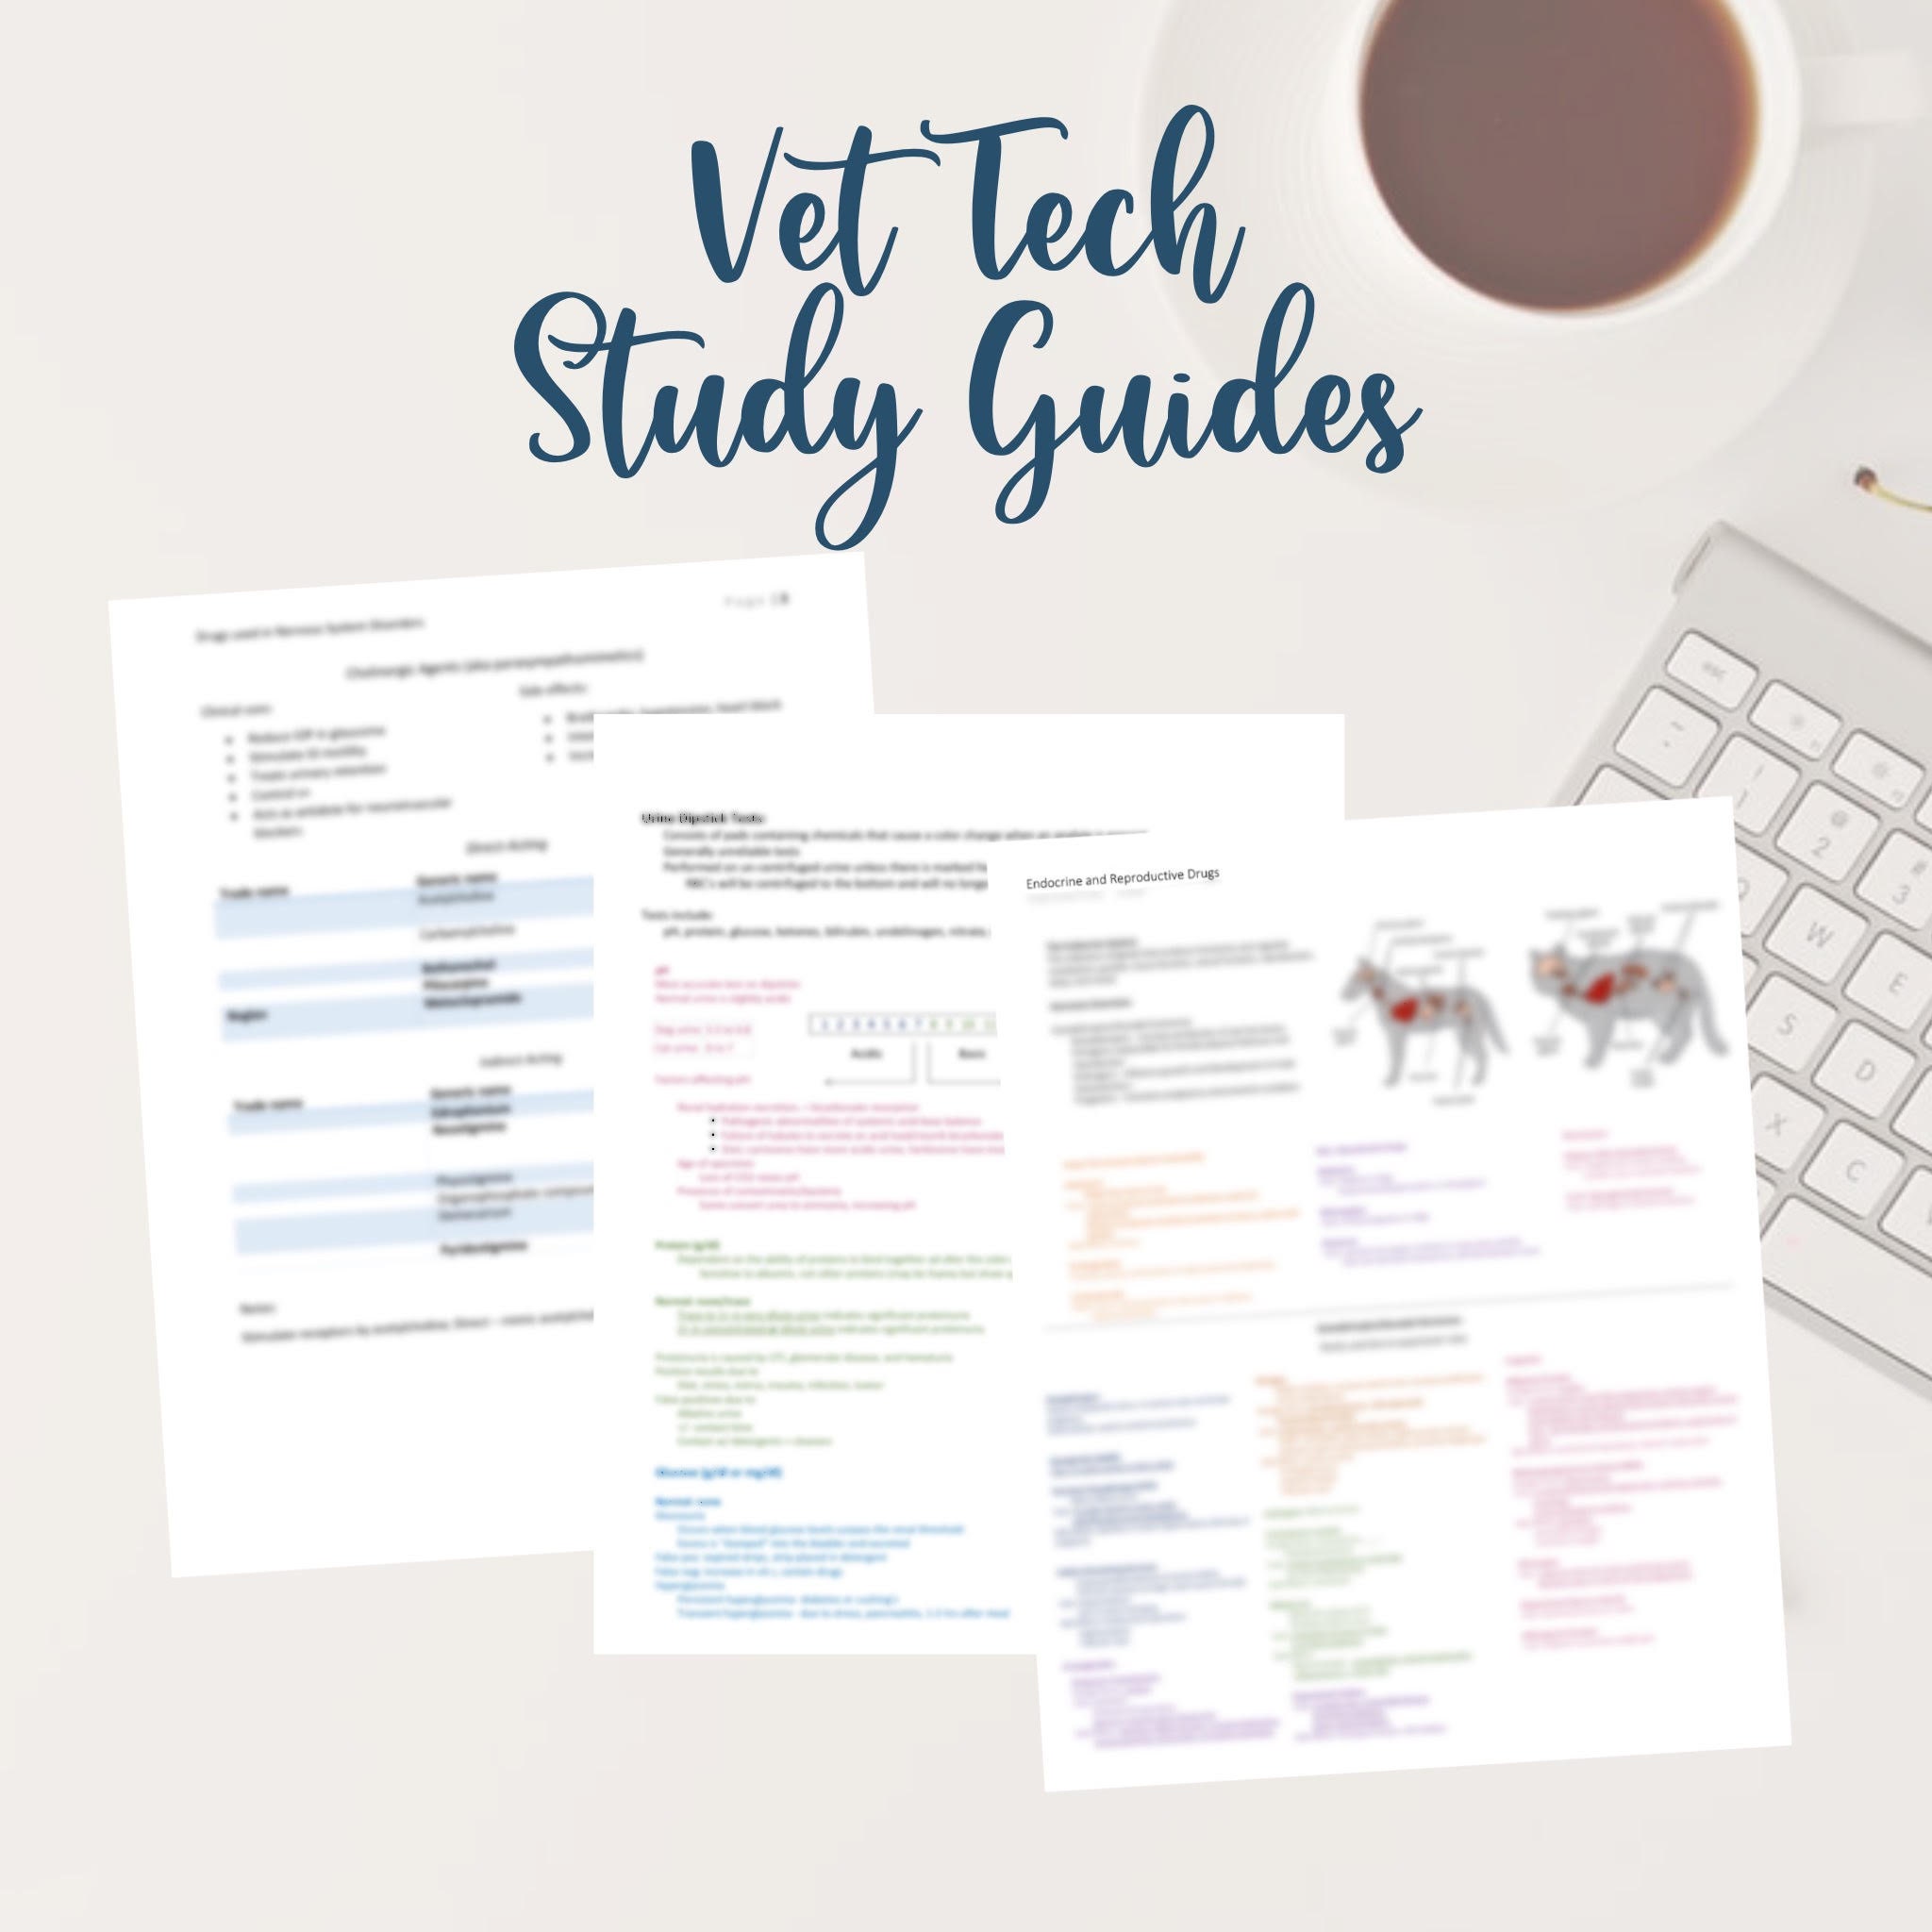 vtne secrets study guide 2017 pdf